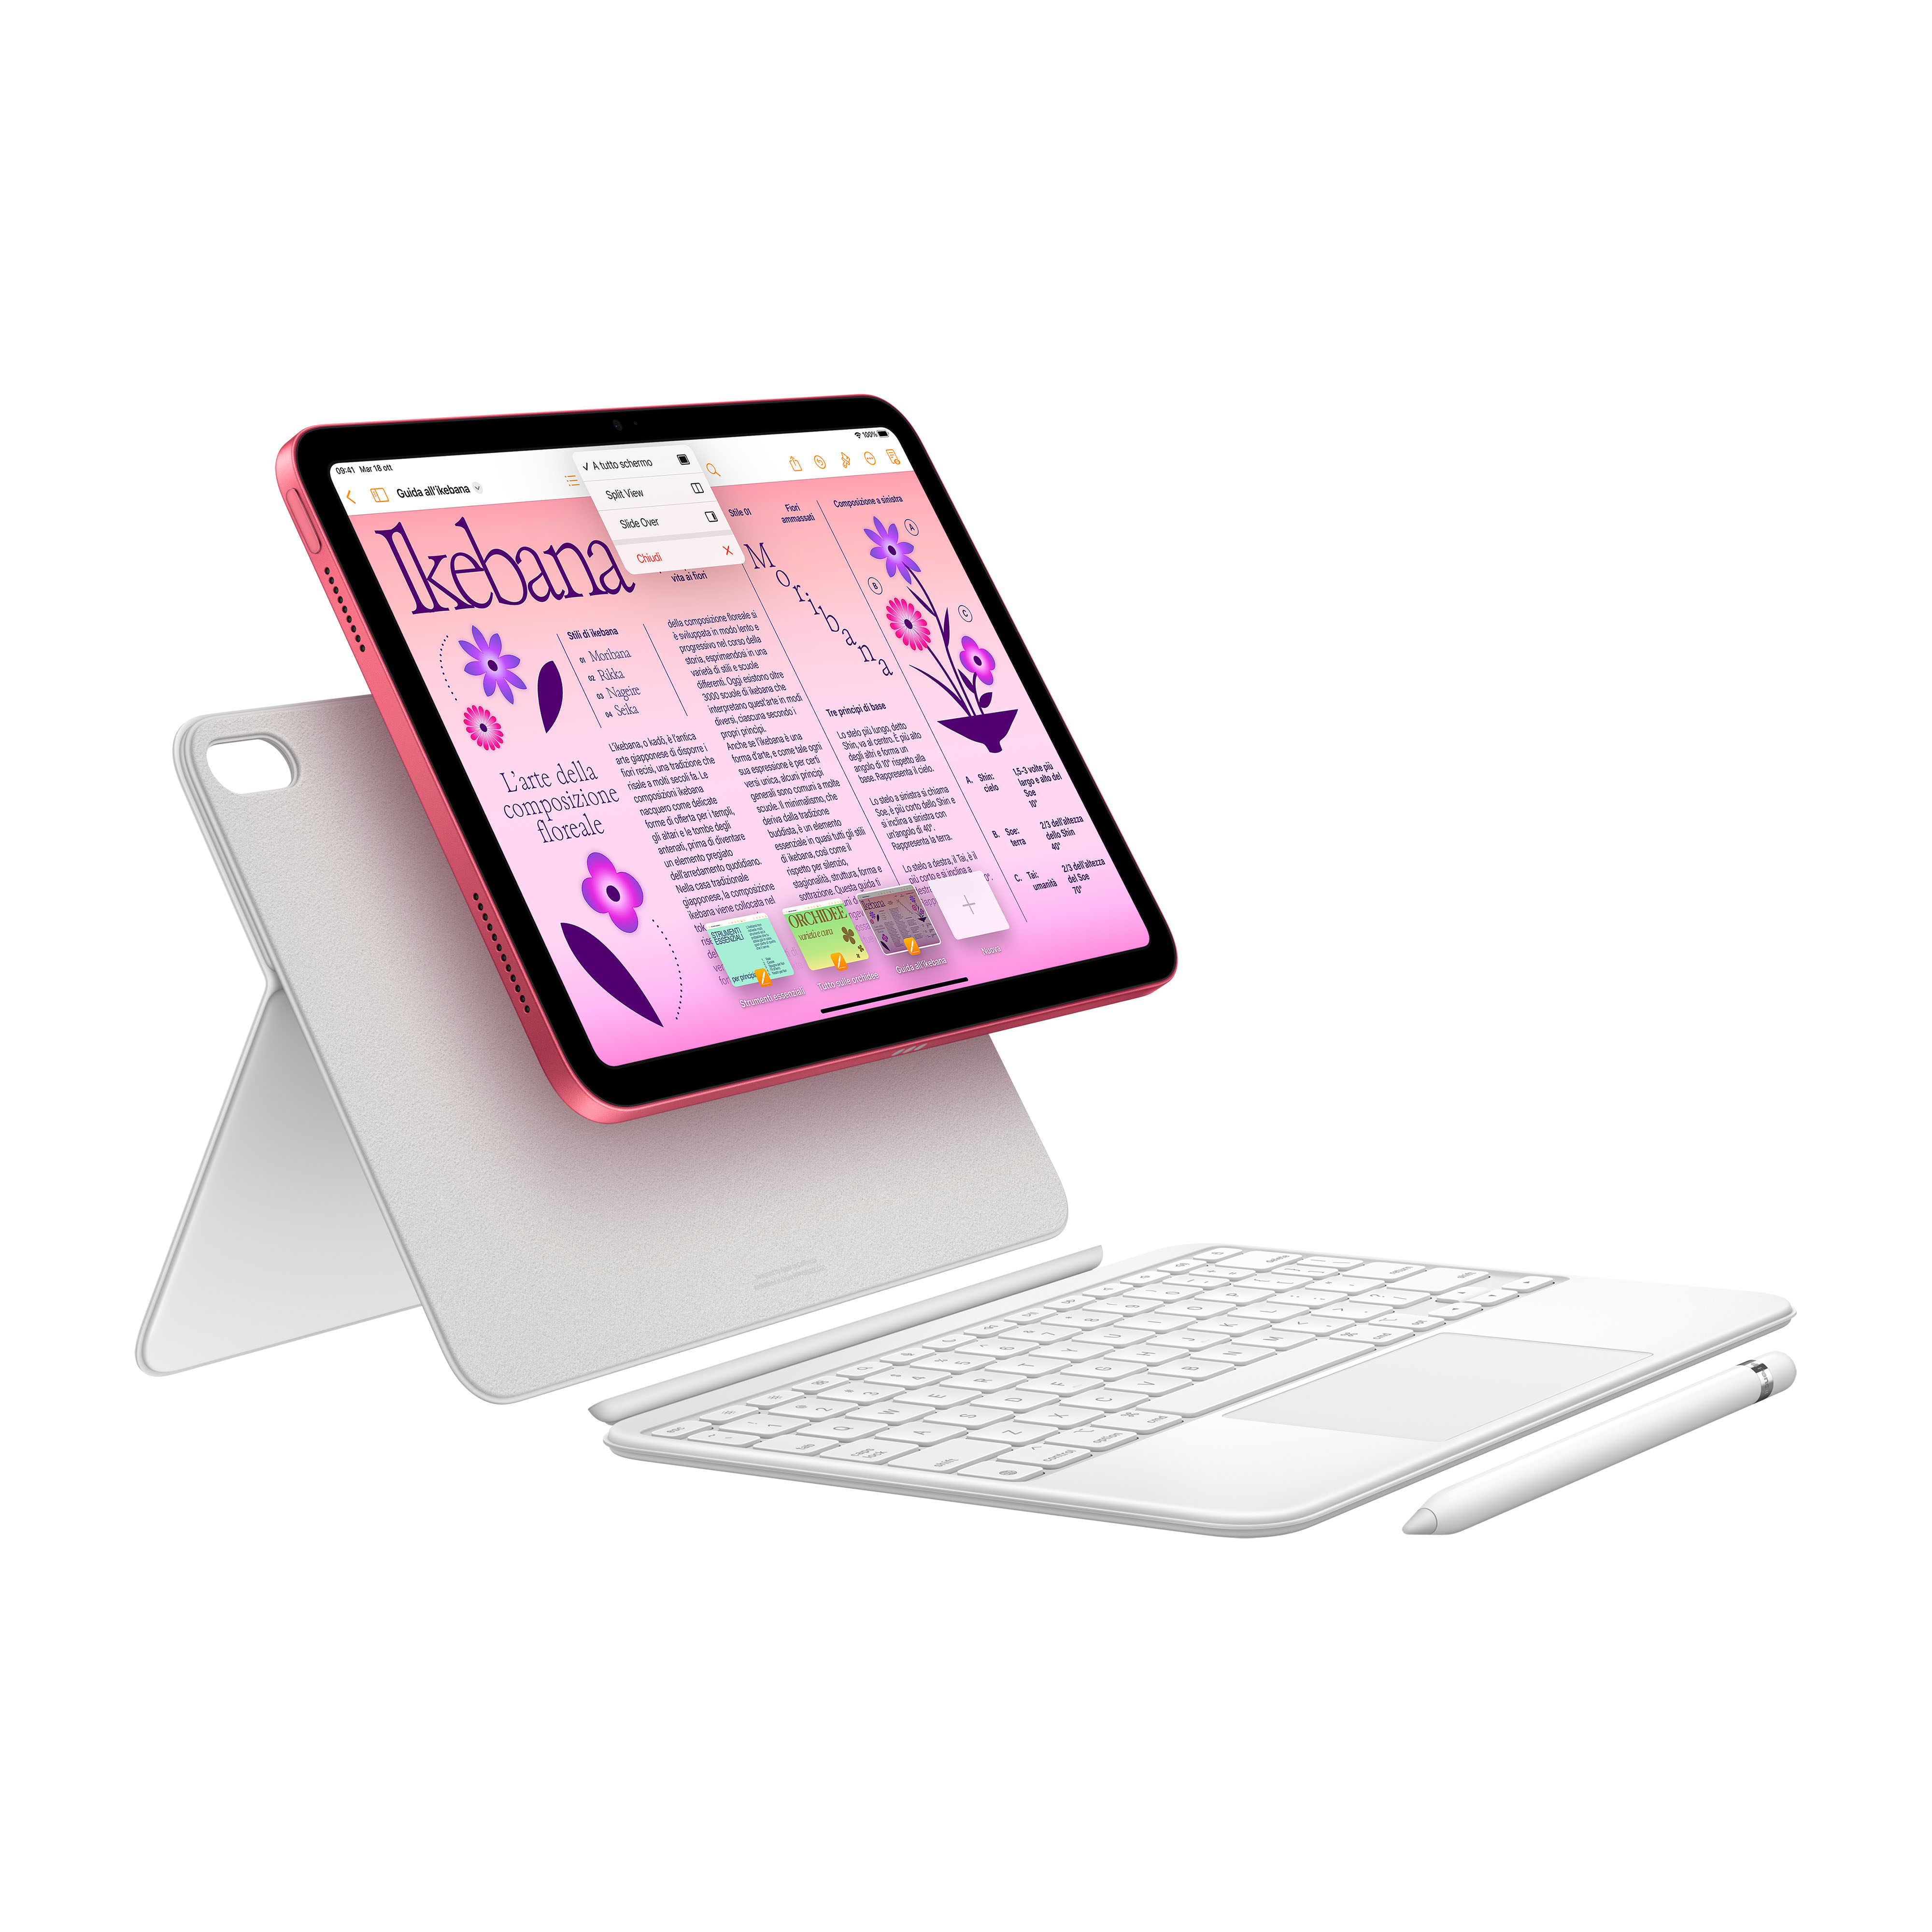 APPLE 10.9inch iPad 10th Generation (2022) WiFi + Cellular 64GB Pink